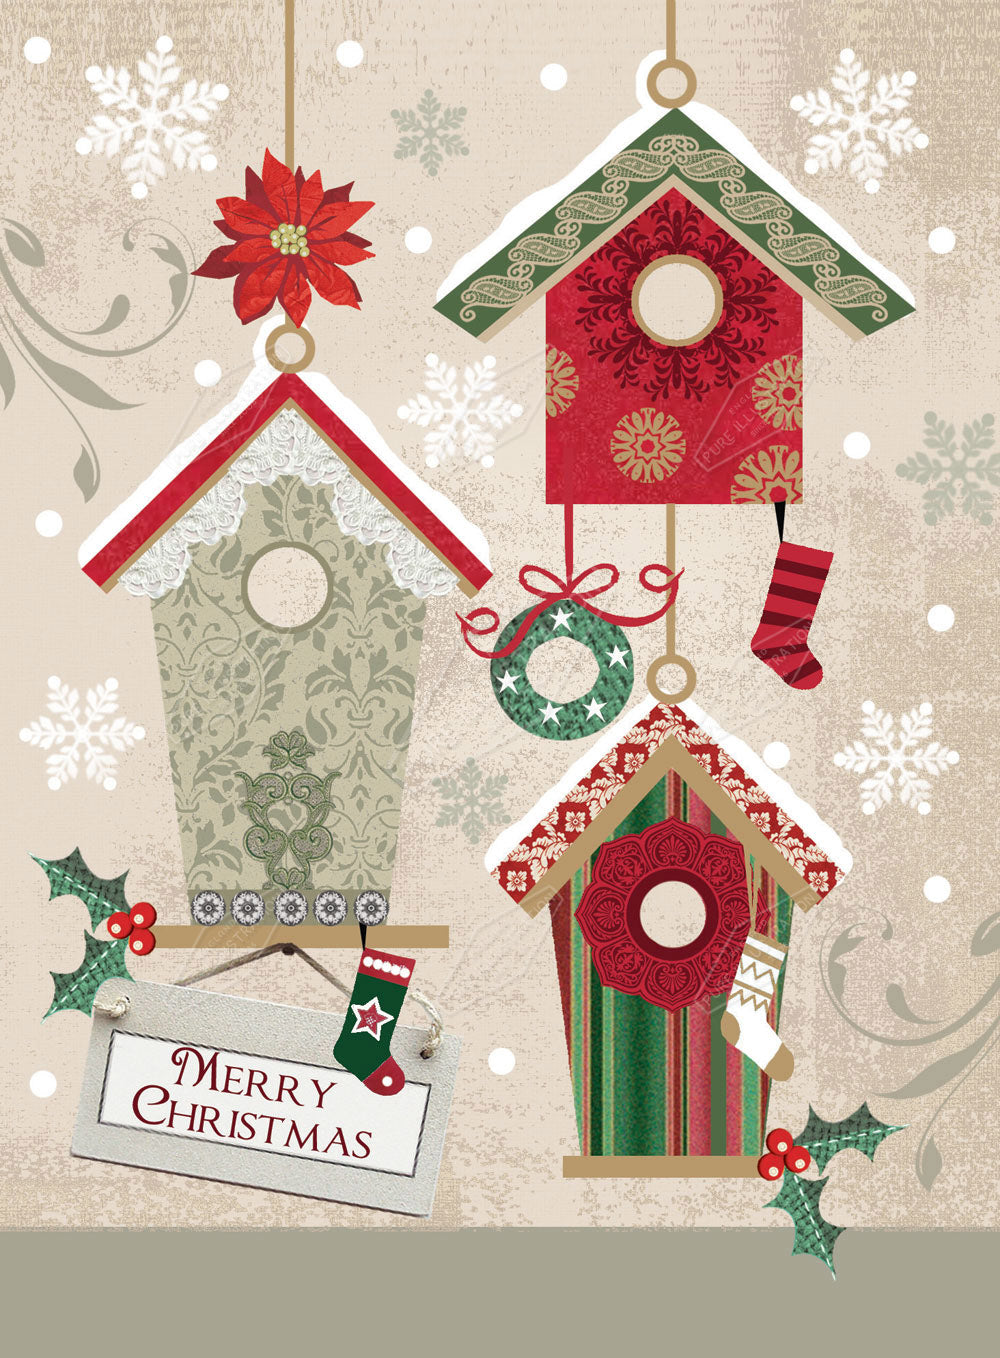 00023295DEV - Deva Evans is represented by Pure Art Licensing Agency - Christmas Greeting Card Design